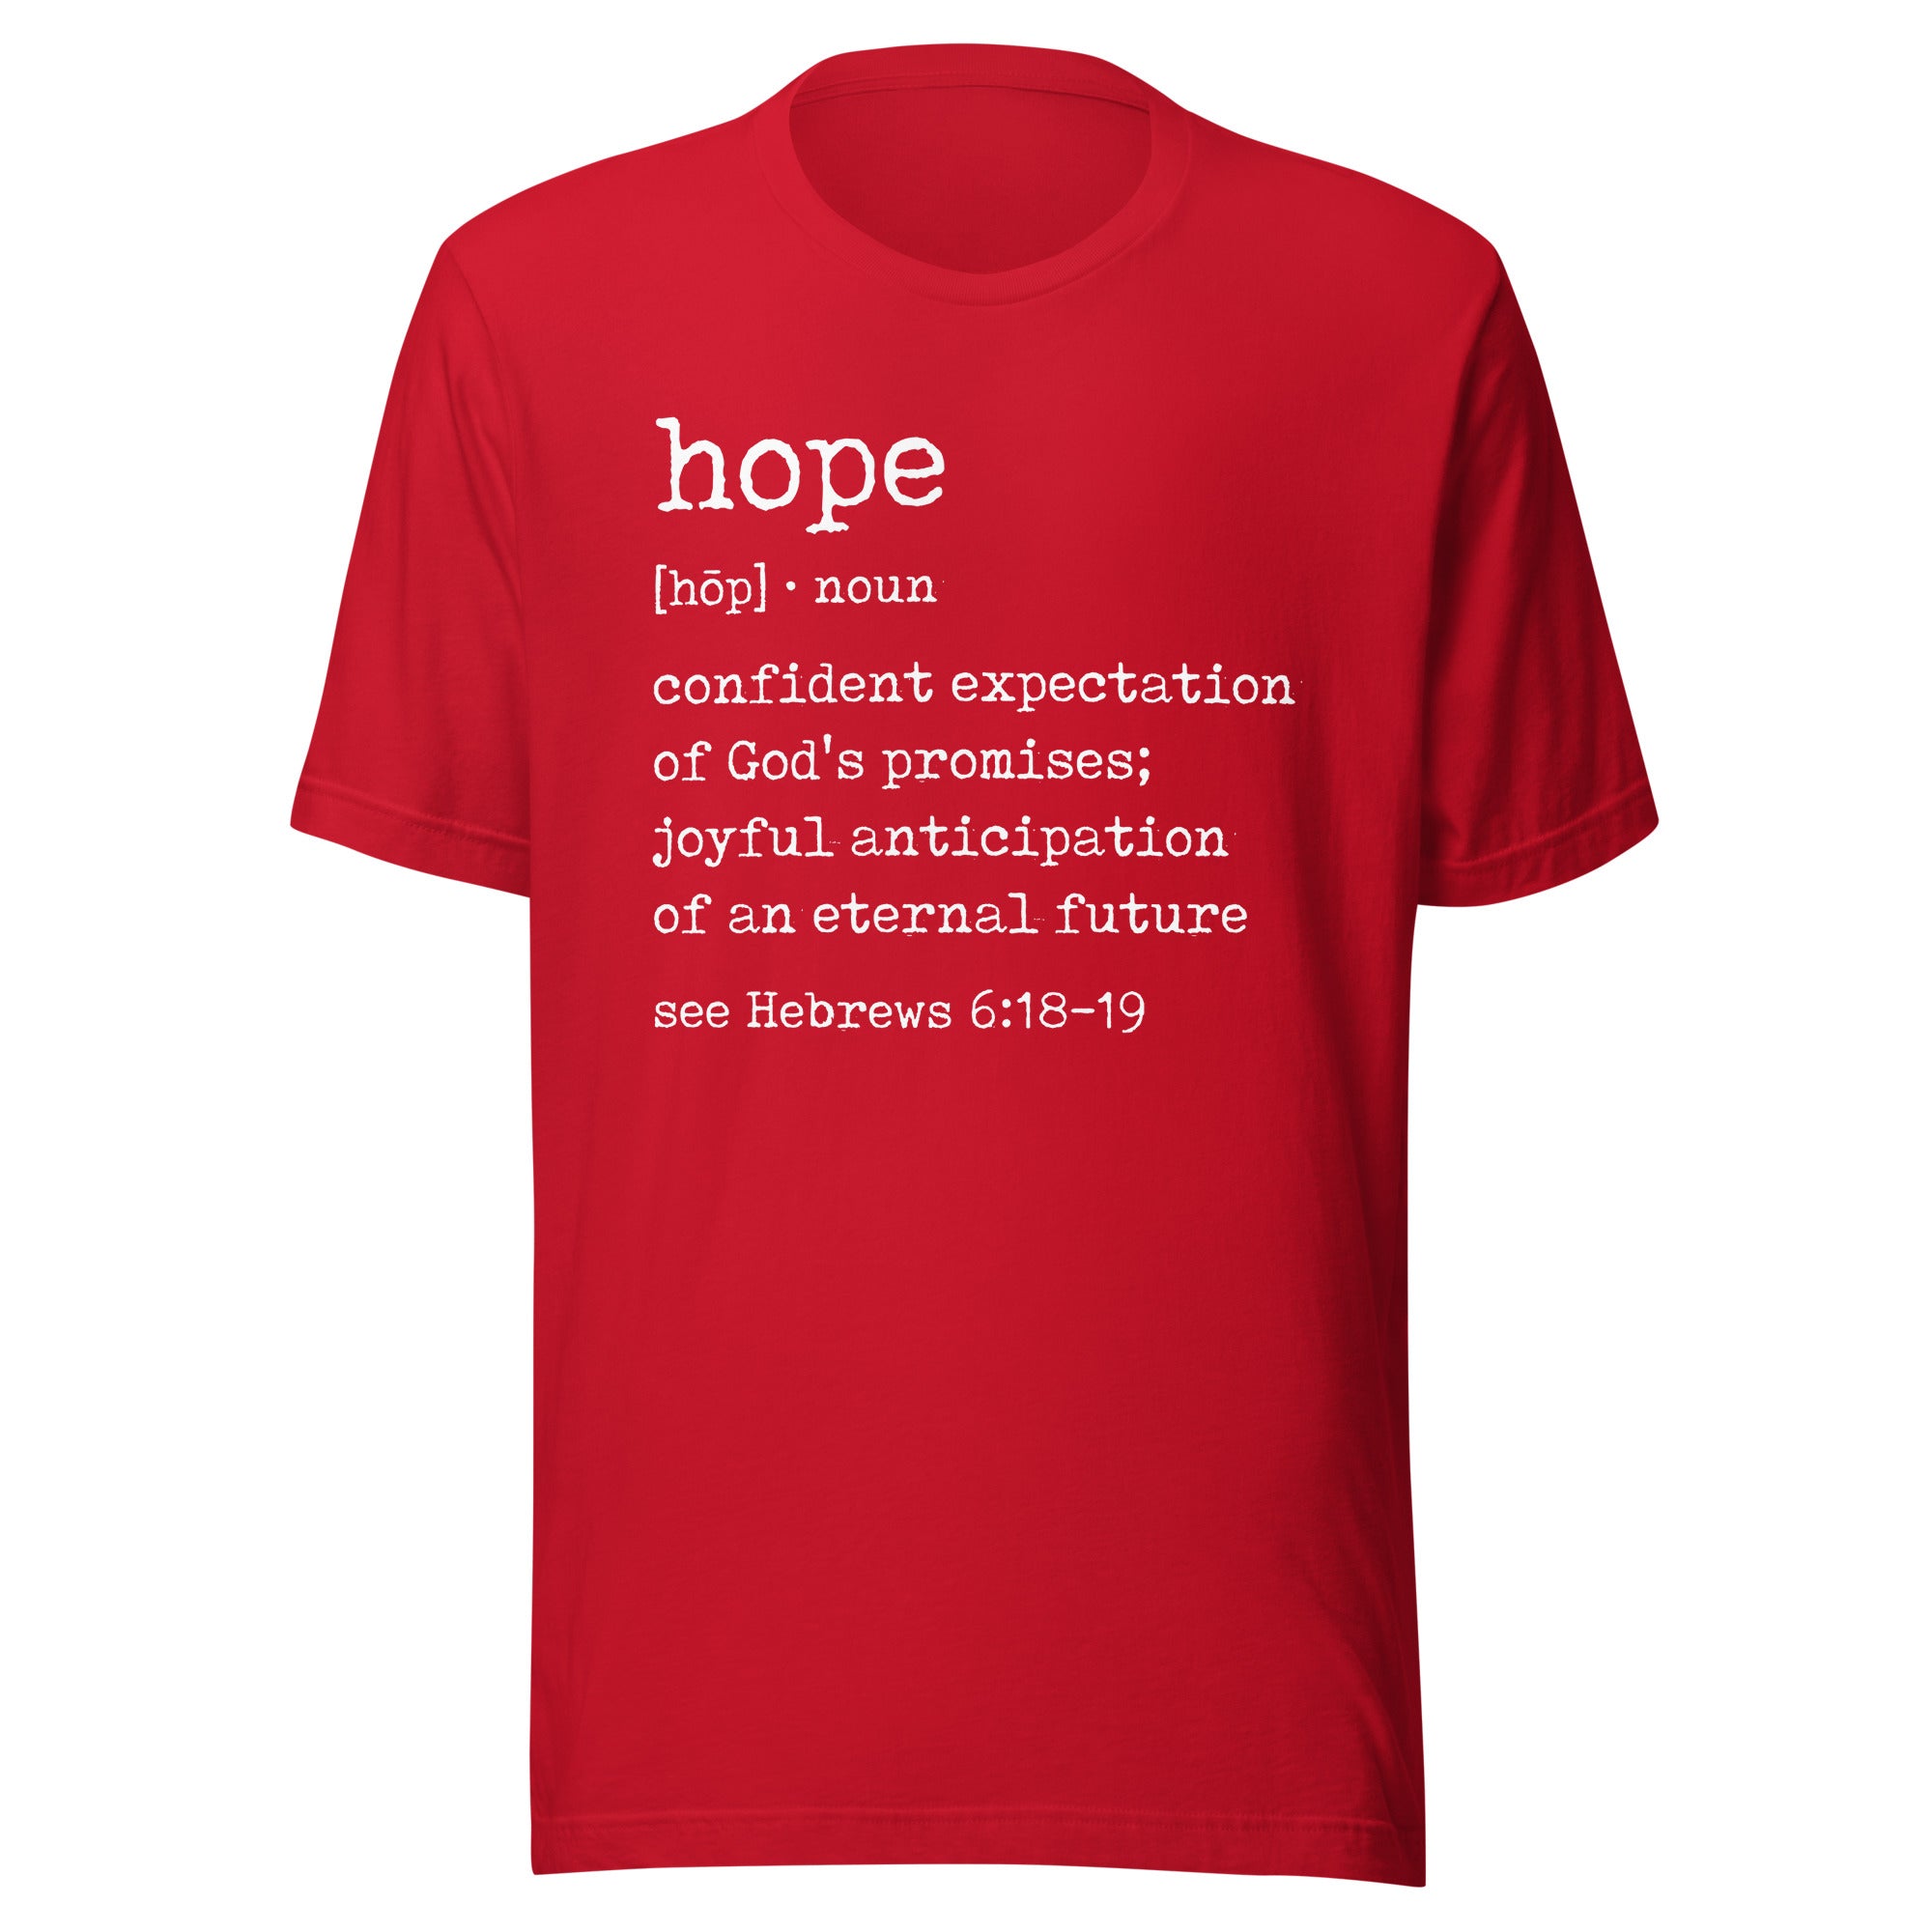 Hope Definition - Women's Classic T-Shirt